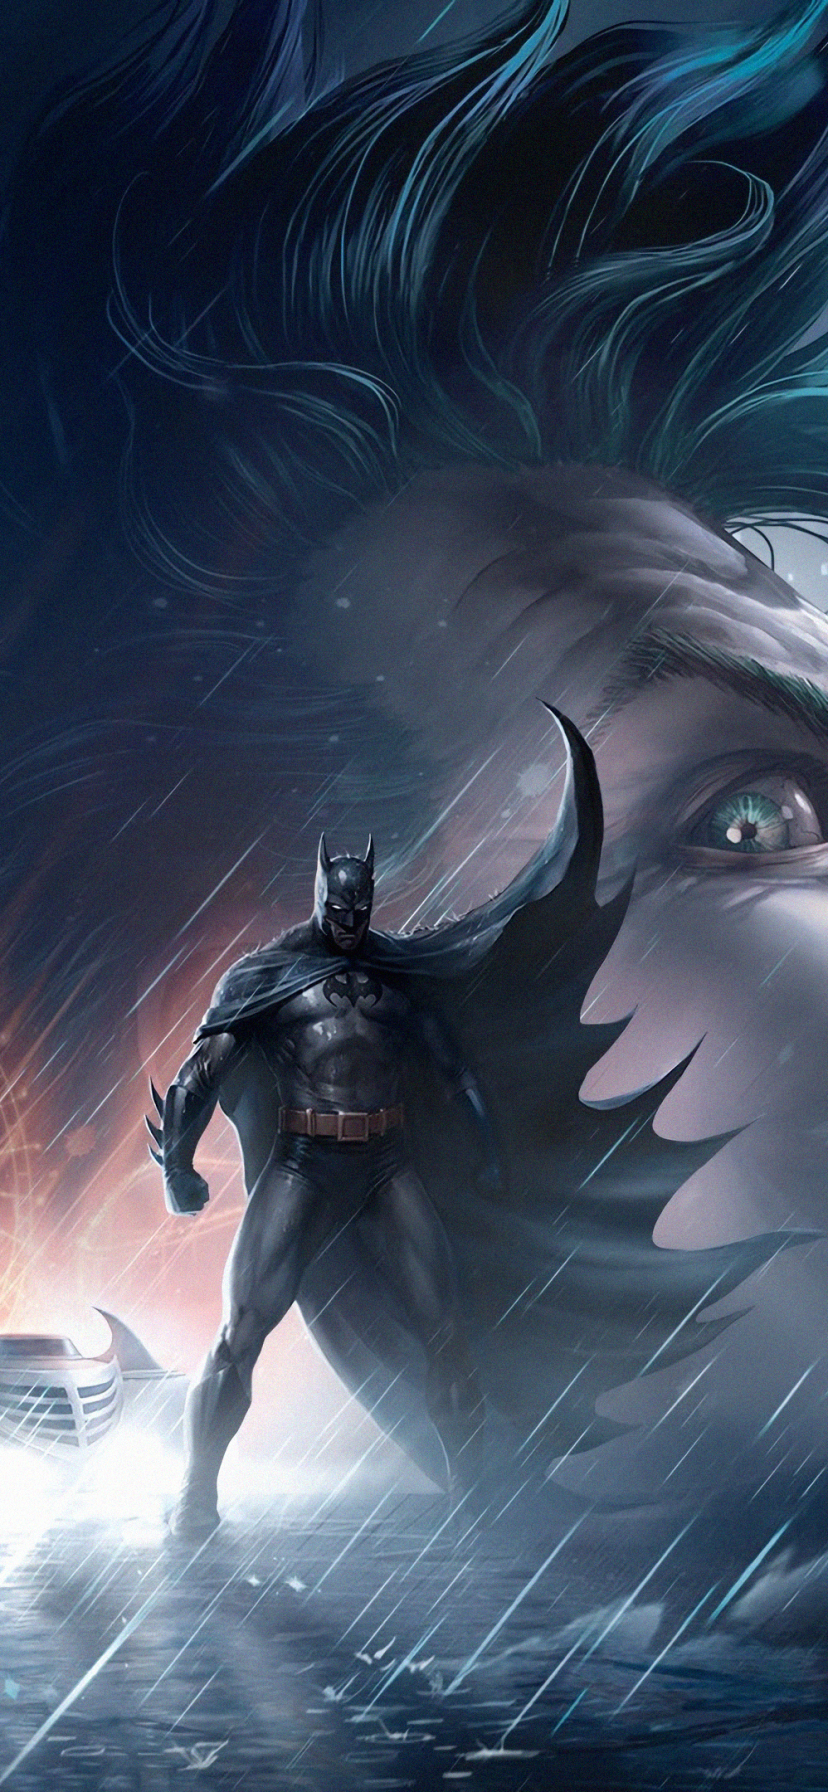 Descarga gratuita de fondo de pantalla para móvil de Historietas, Dc Comics, Hombre Murciélago, Batman: La Broma Asesina.